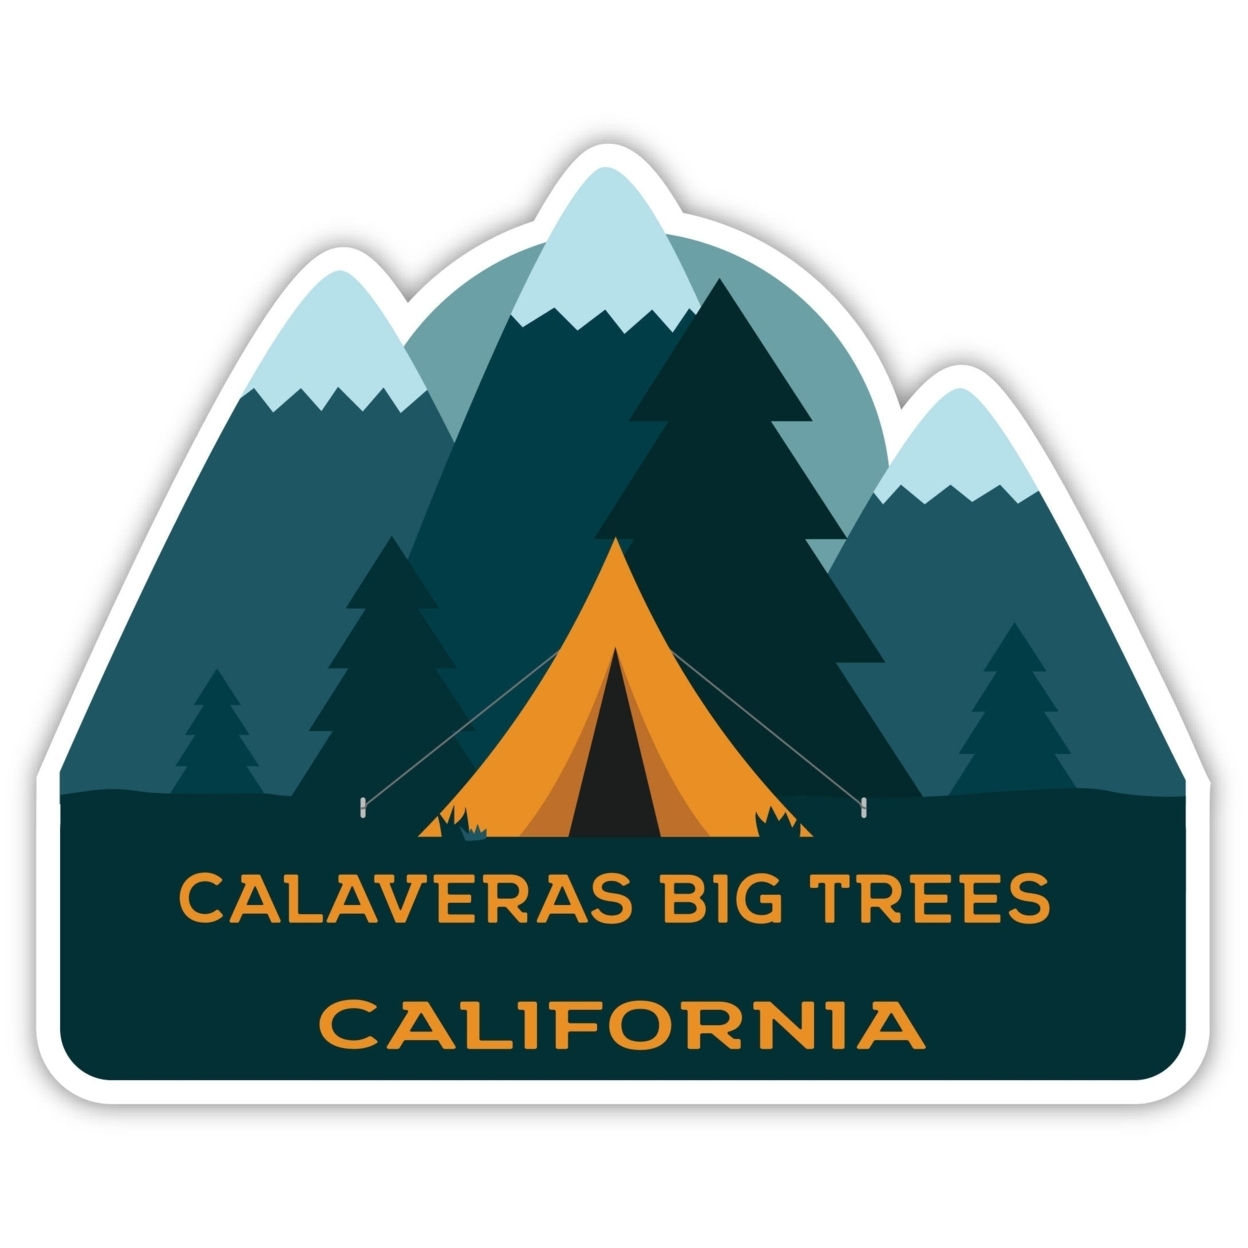 Calaveras Big Trees California Souvenir Decorative Stickers (Choose Theme And Size) - 4-Pack, 8-Inch, Camp Life